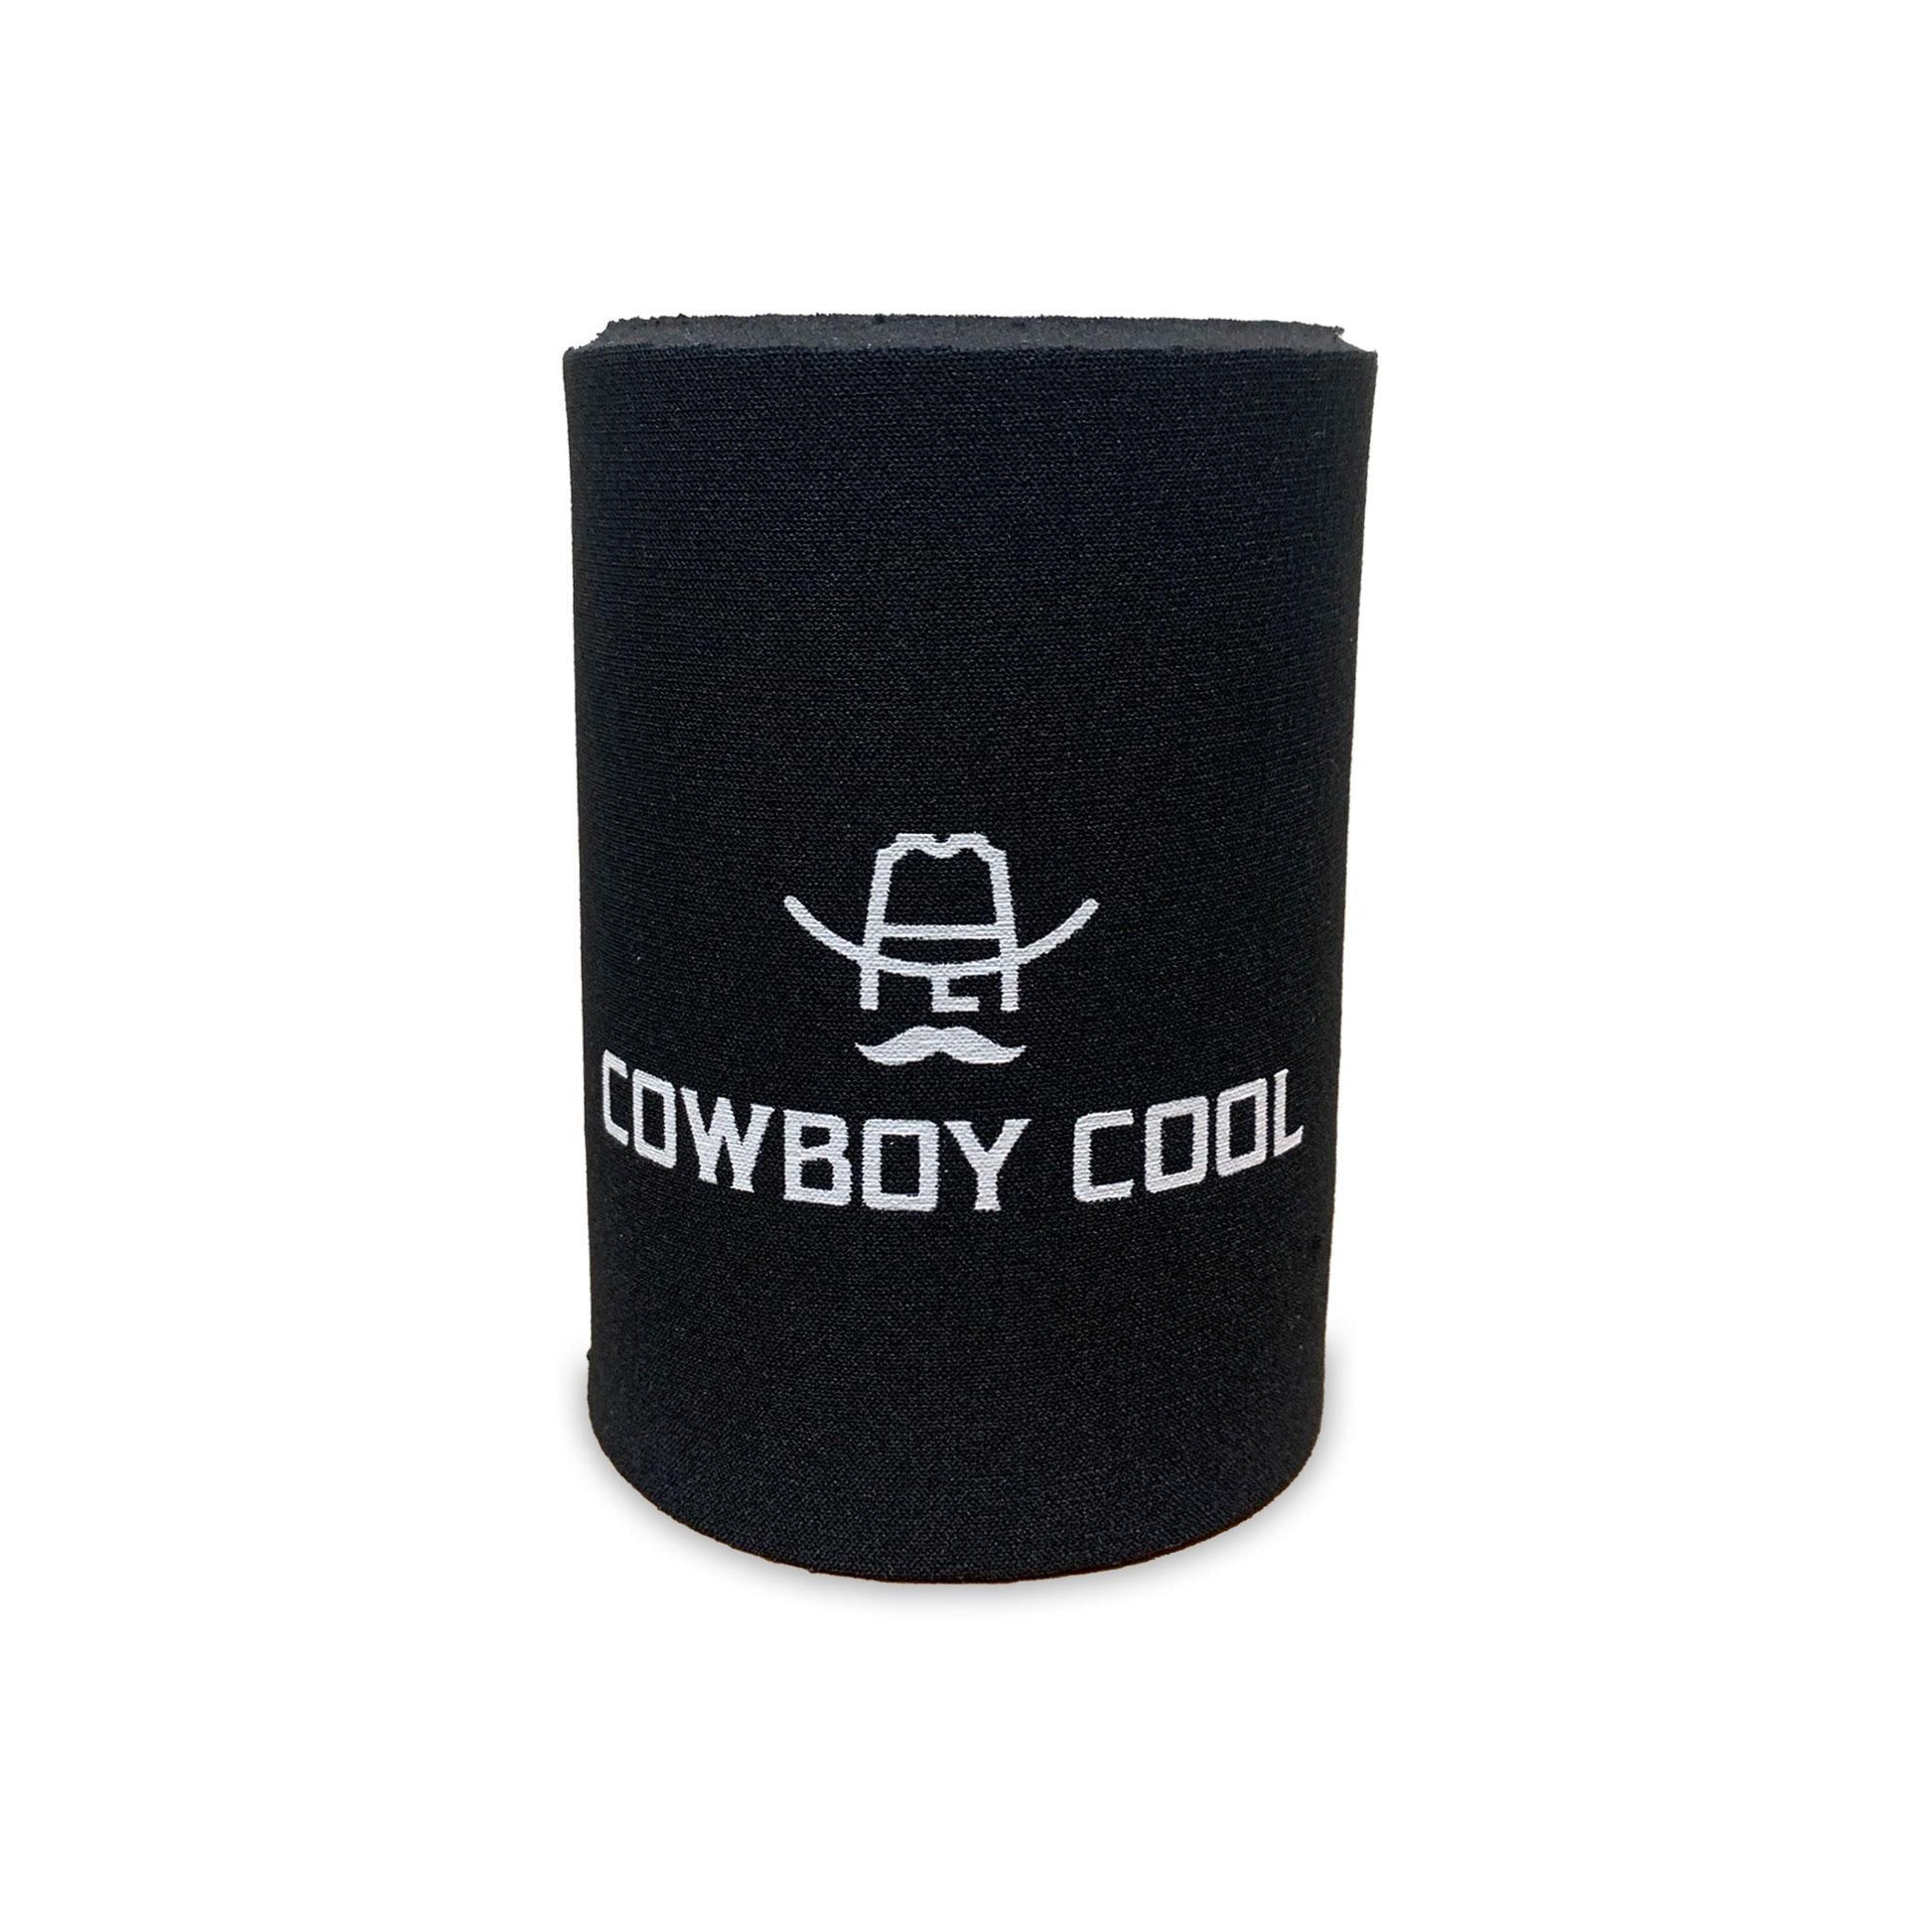 Cowboy Cool Coozie - Cowboy Cool